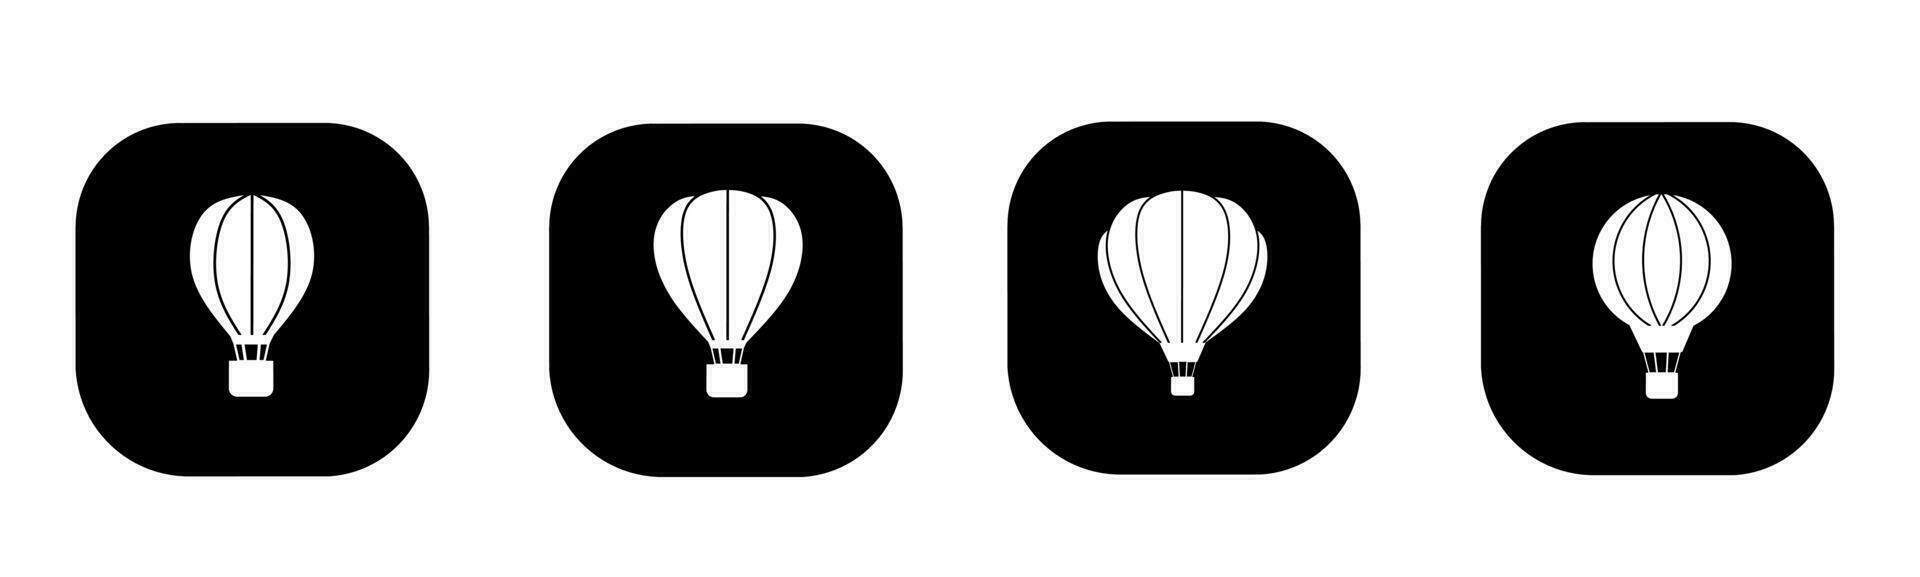 chaud air ballon icône dans plat. une chaud air ballon icône conception. Stock vecteur. vecteur